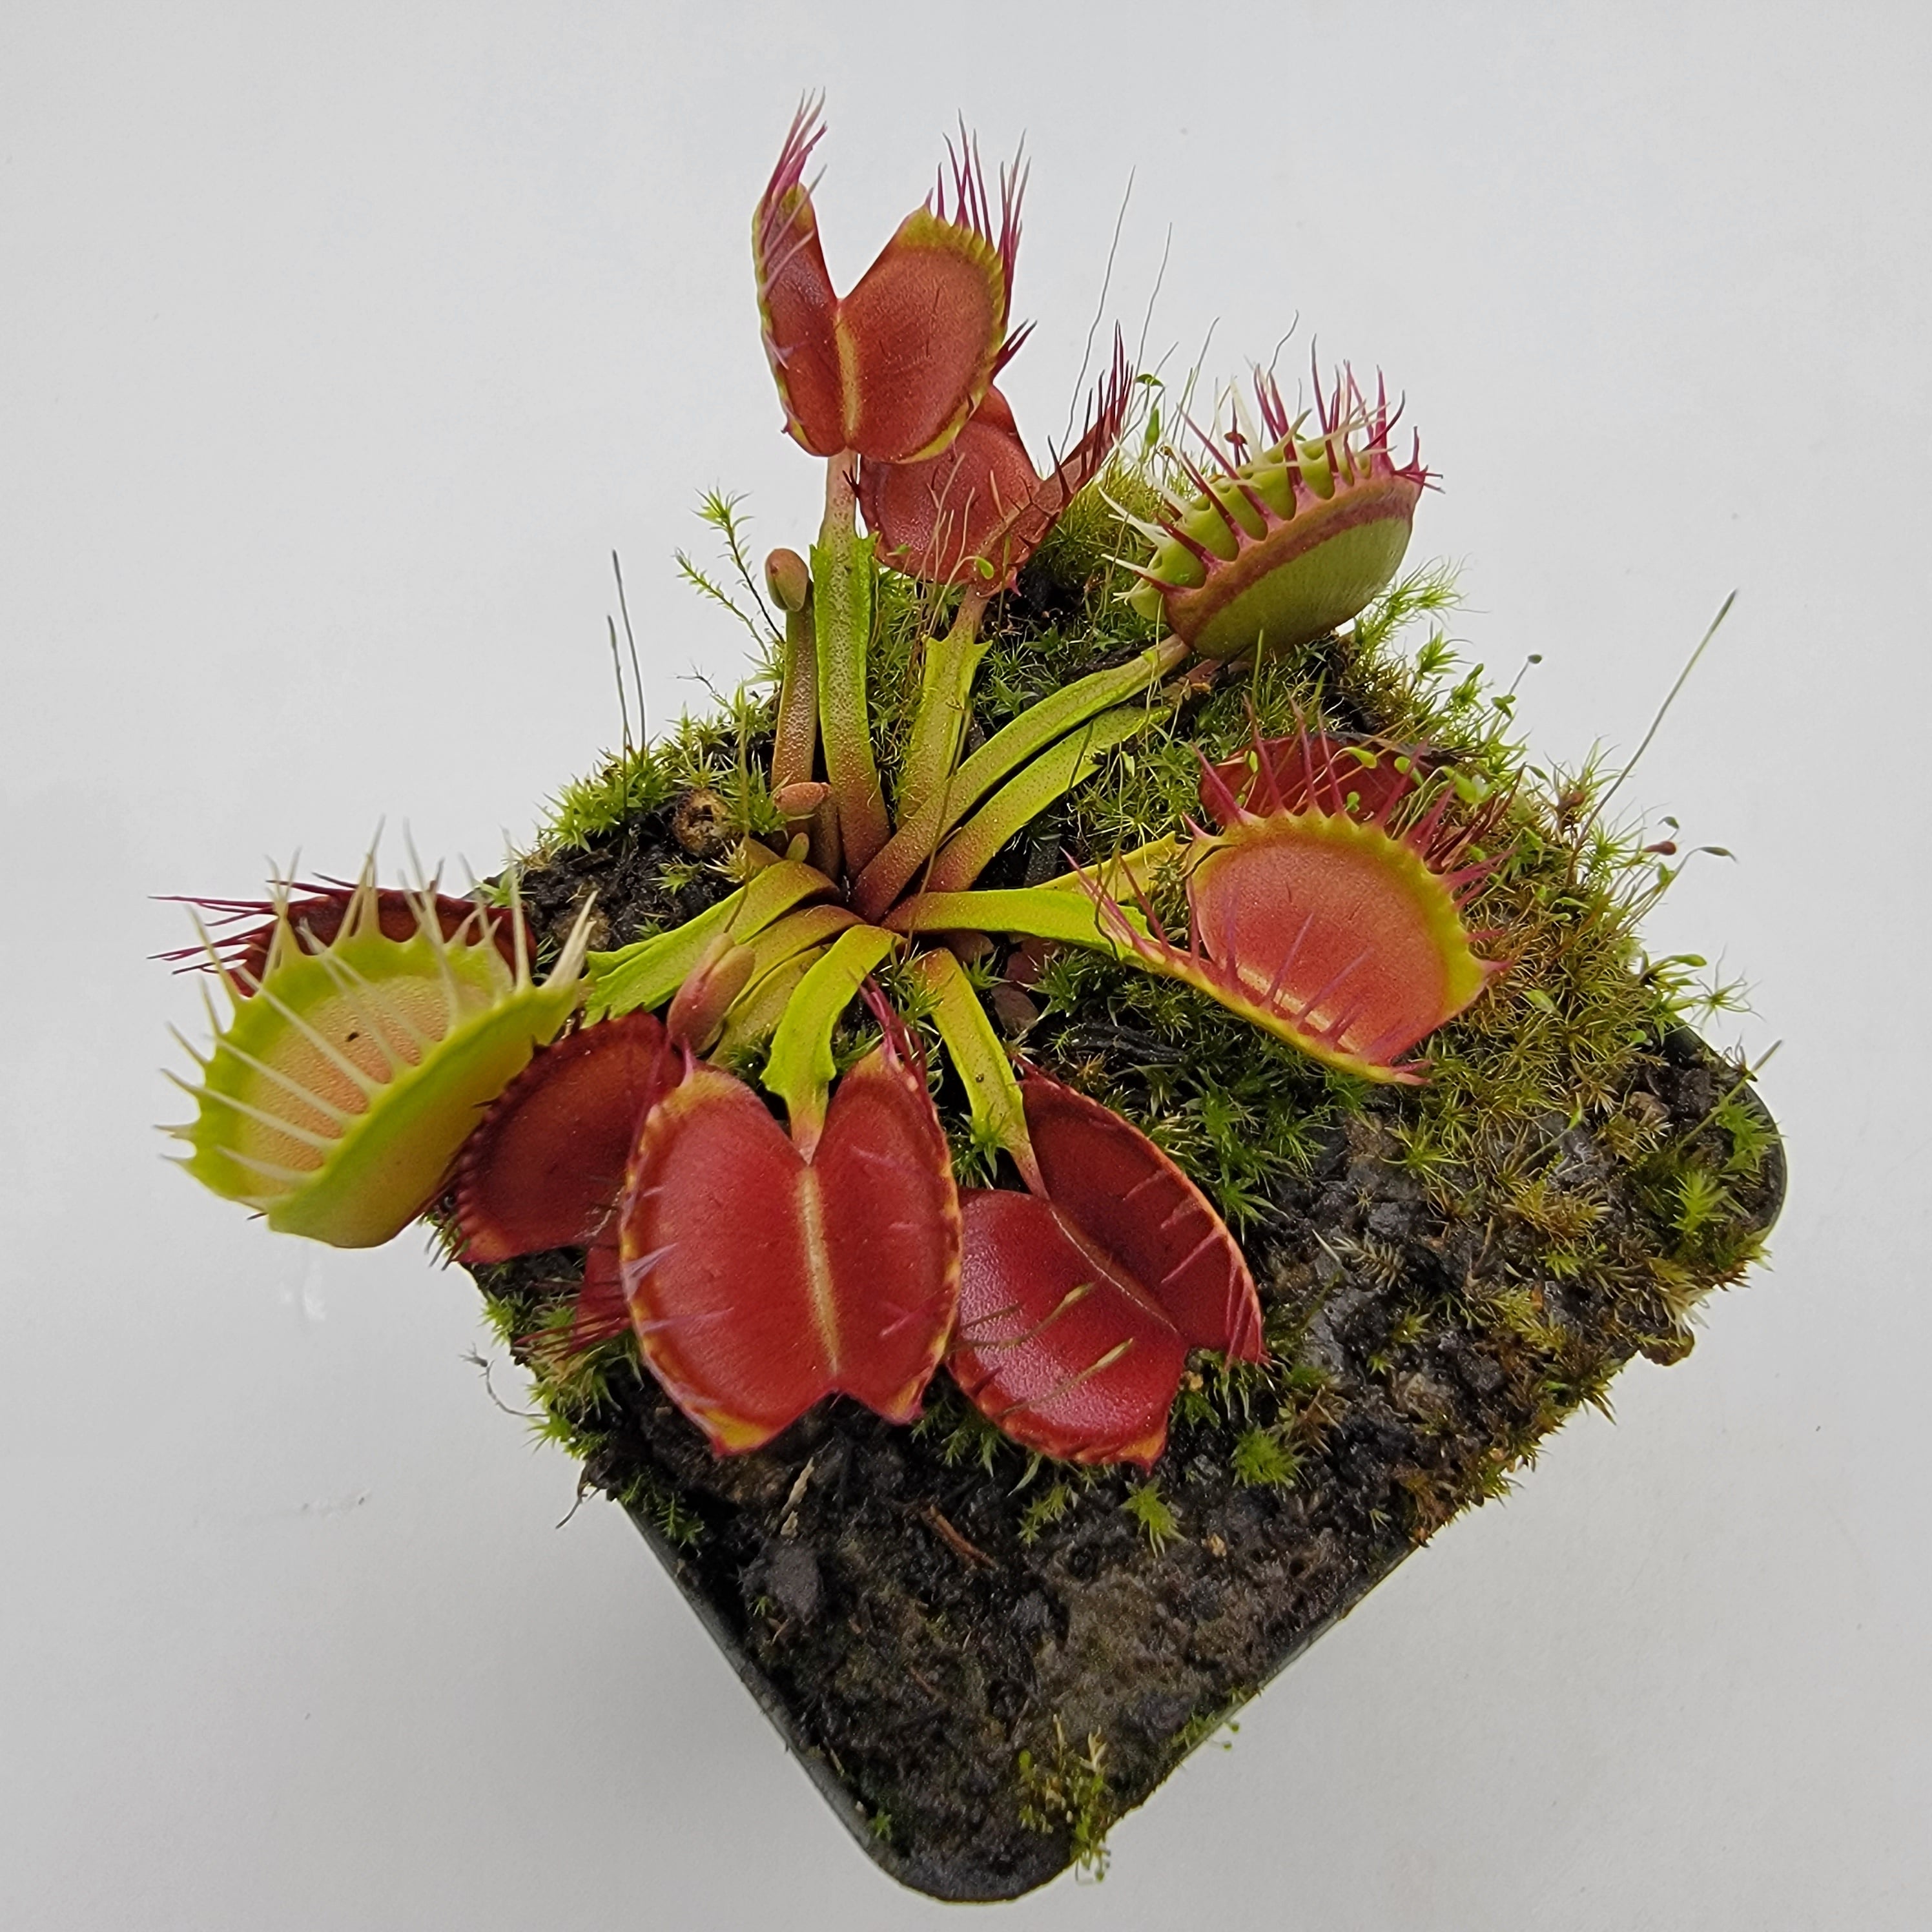 Venus flytrap (Dionaea muscipula) 'Long Red Fingers' - Rainbow Carnivorous Plants LLC